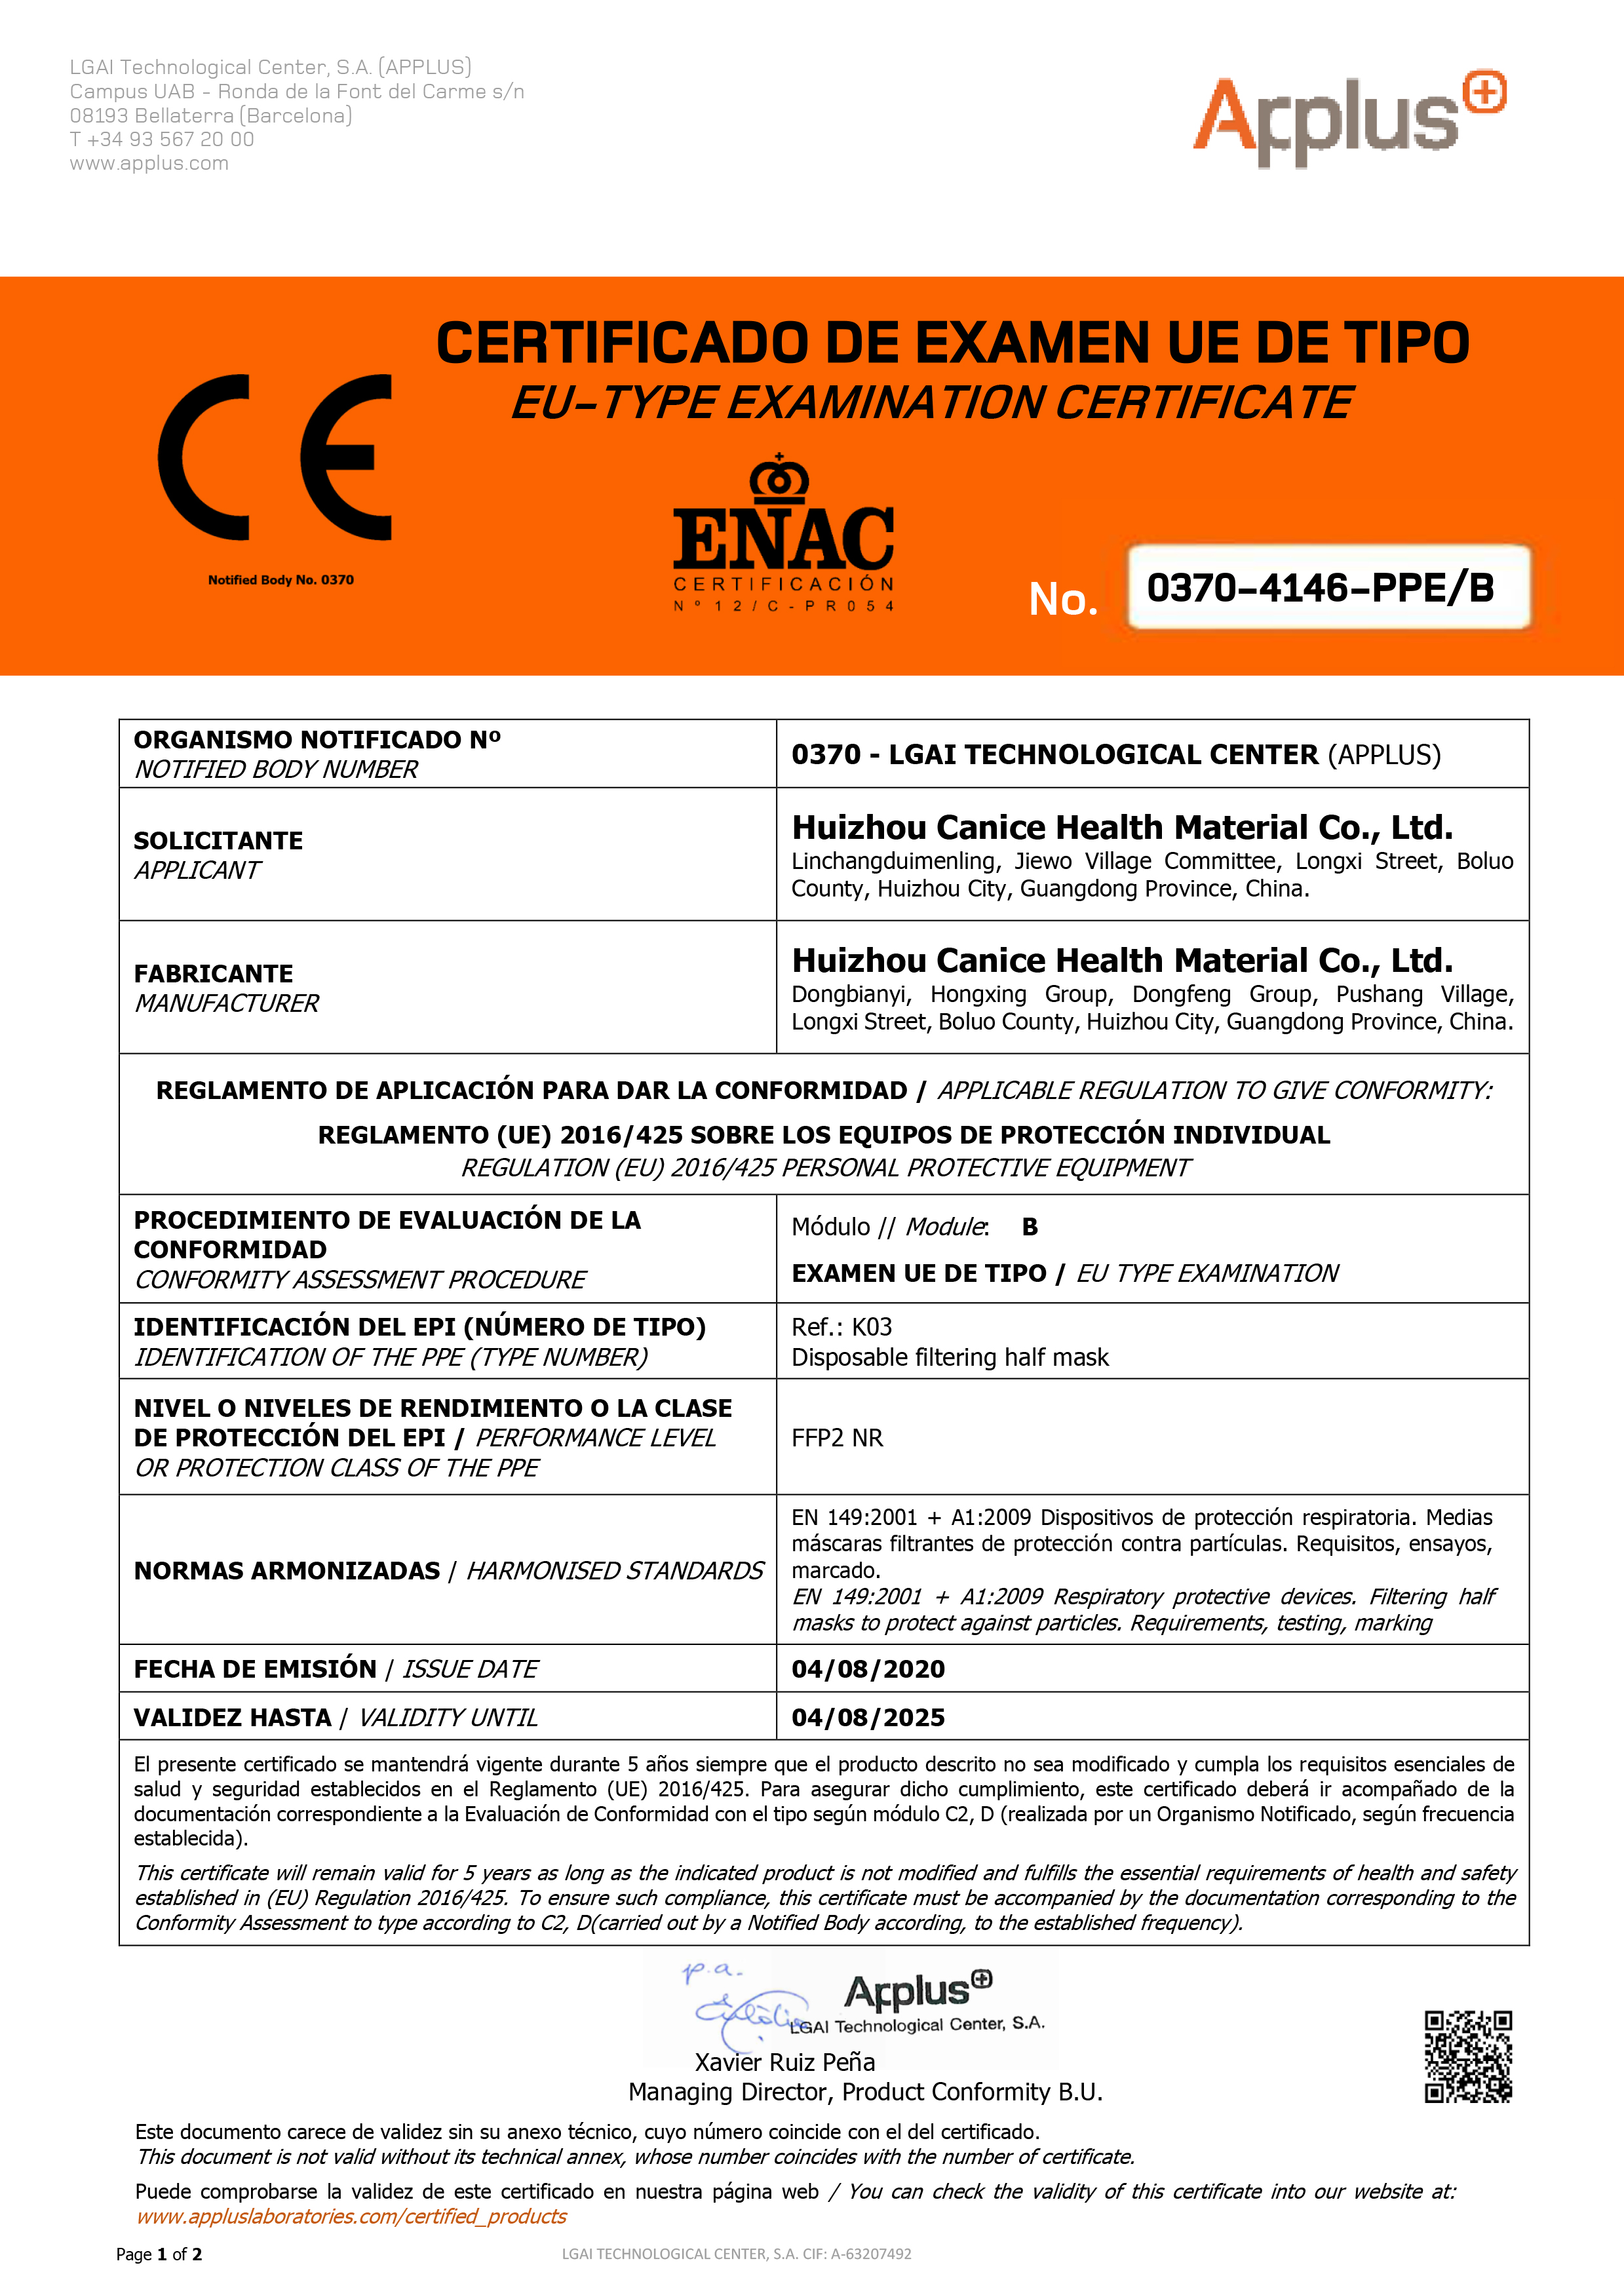 CE0370  Module B for Non Medical  FFP2 NR